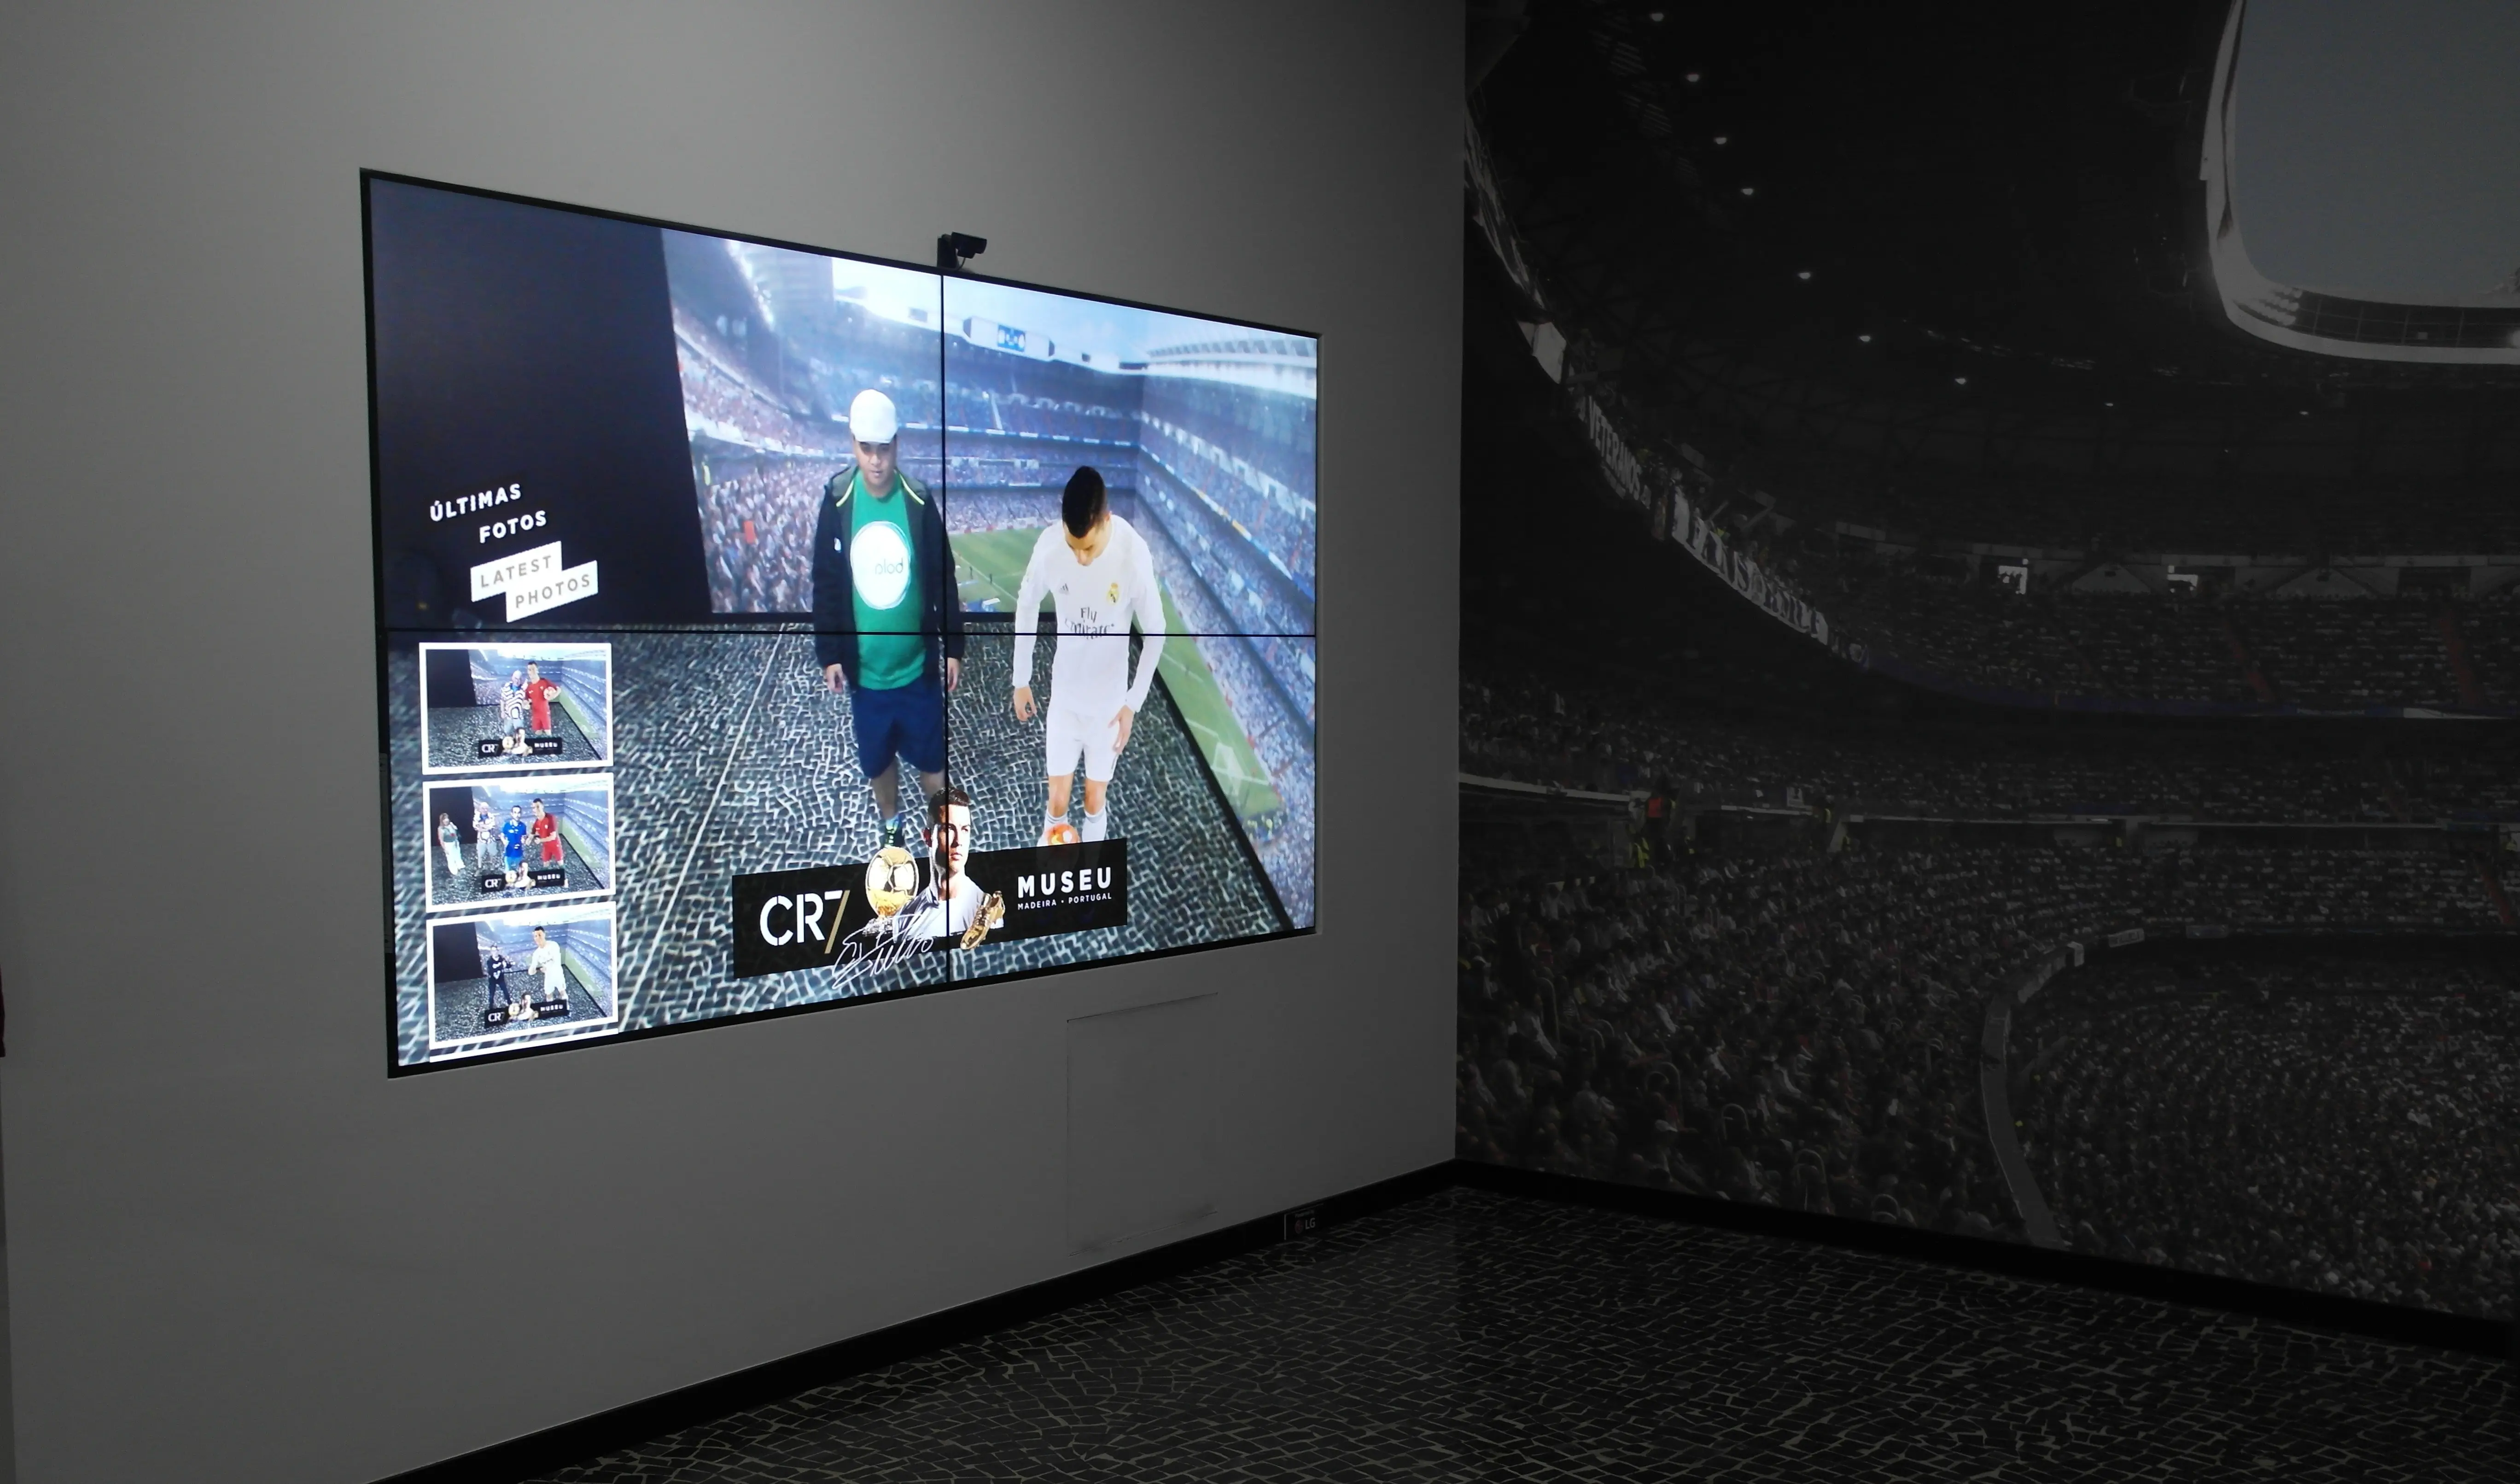 Virtual game di Museum Cristiano Ronaldo, di Funchal, Madeira, Portugal. (Bola.com/Reza Khomaini).